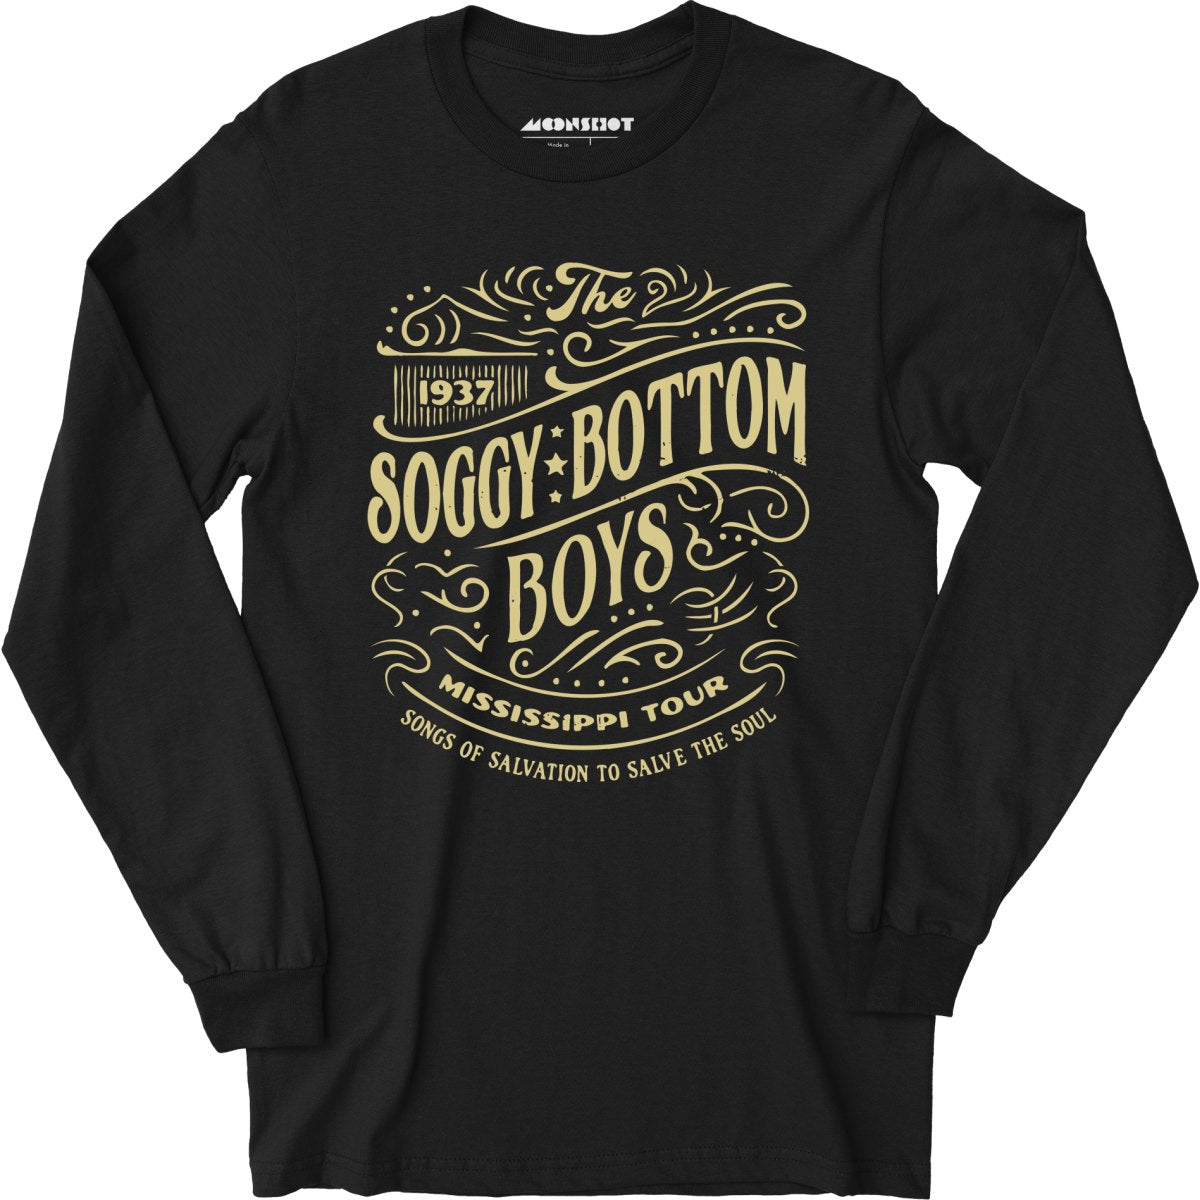 Soggy Bottom Boys - 1937 Mississippi Tour - Long Sleeve T-Shirt